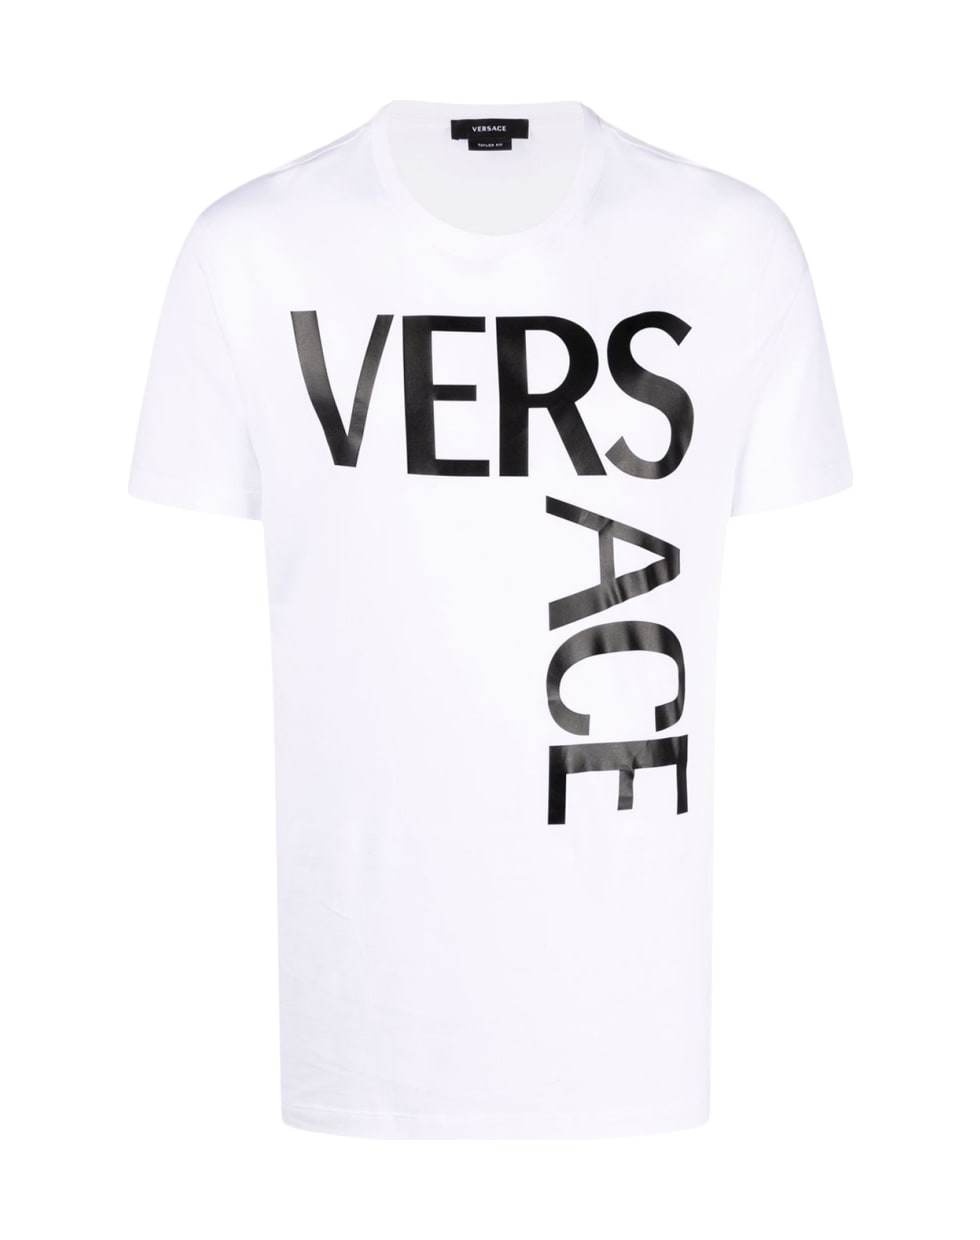 Versace Print - Optic White